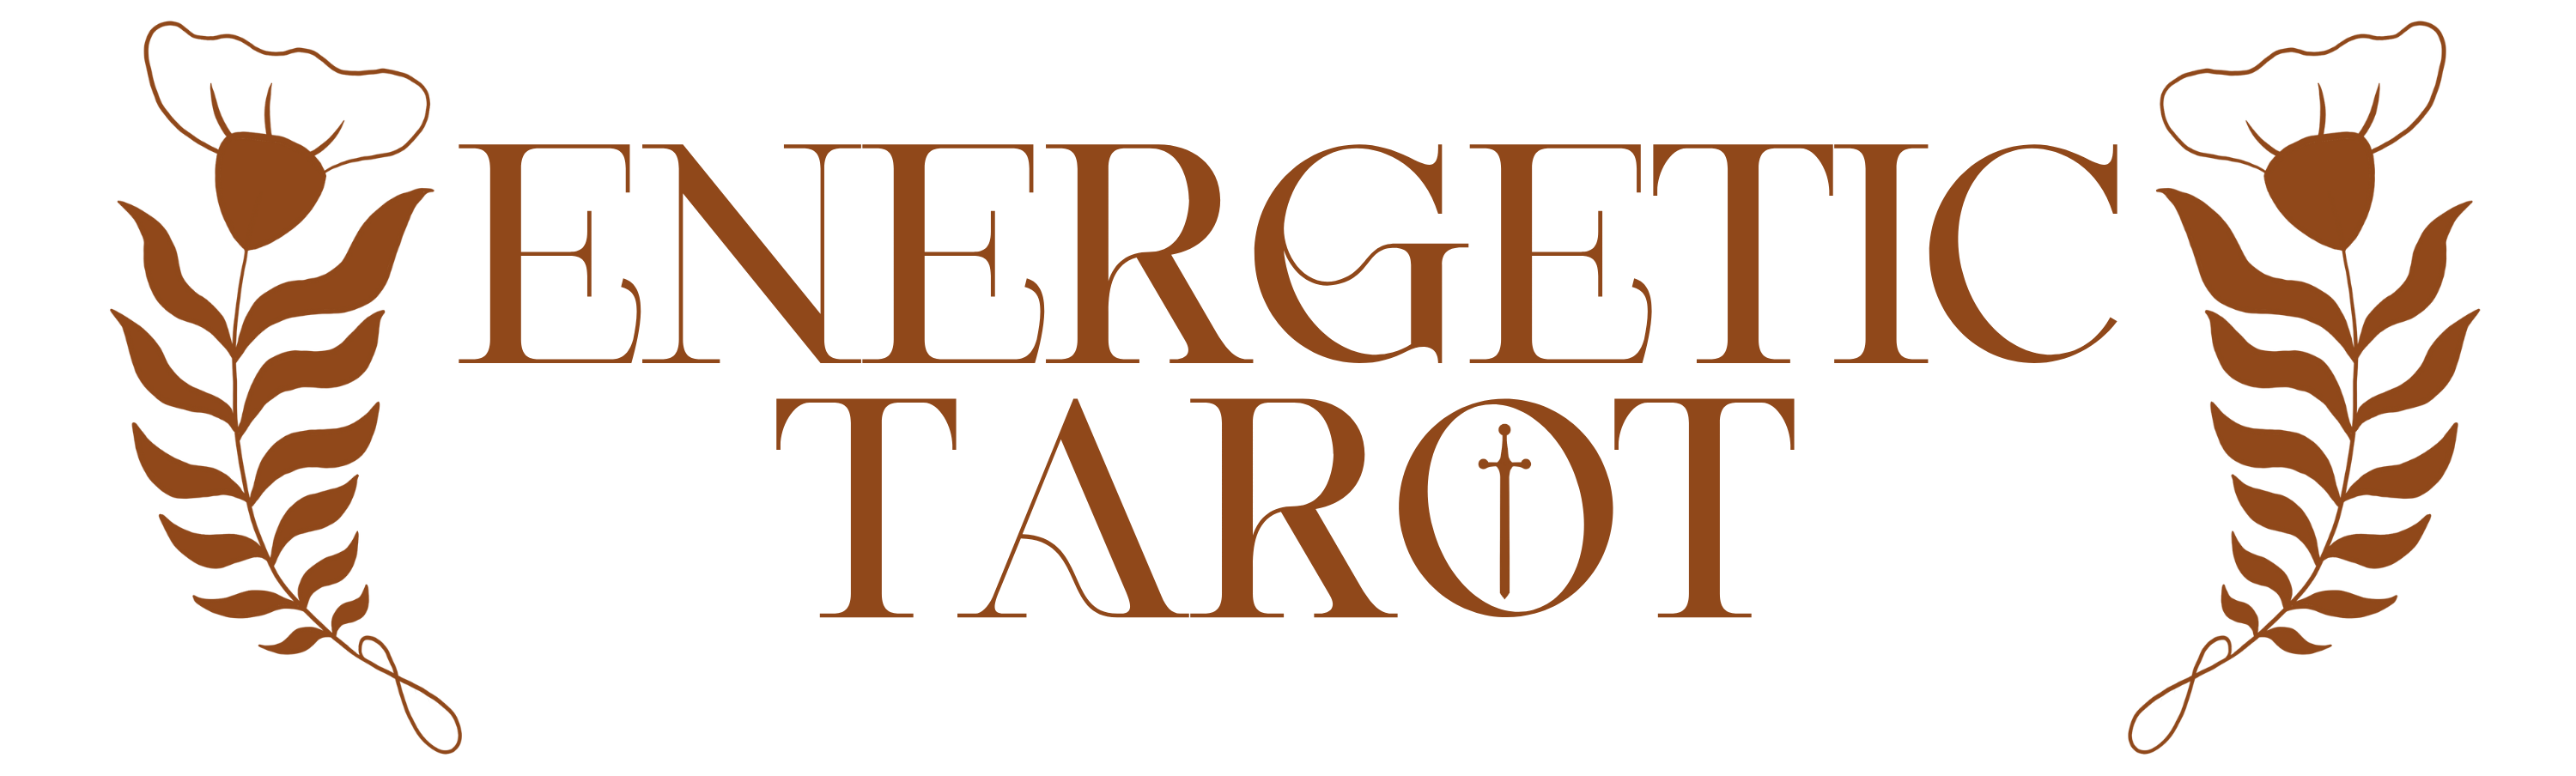 Energetic Tarot Main header logo